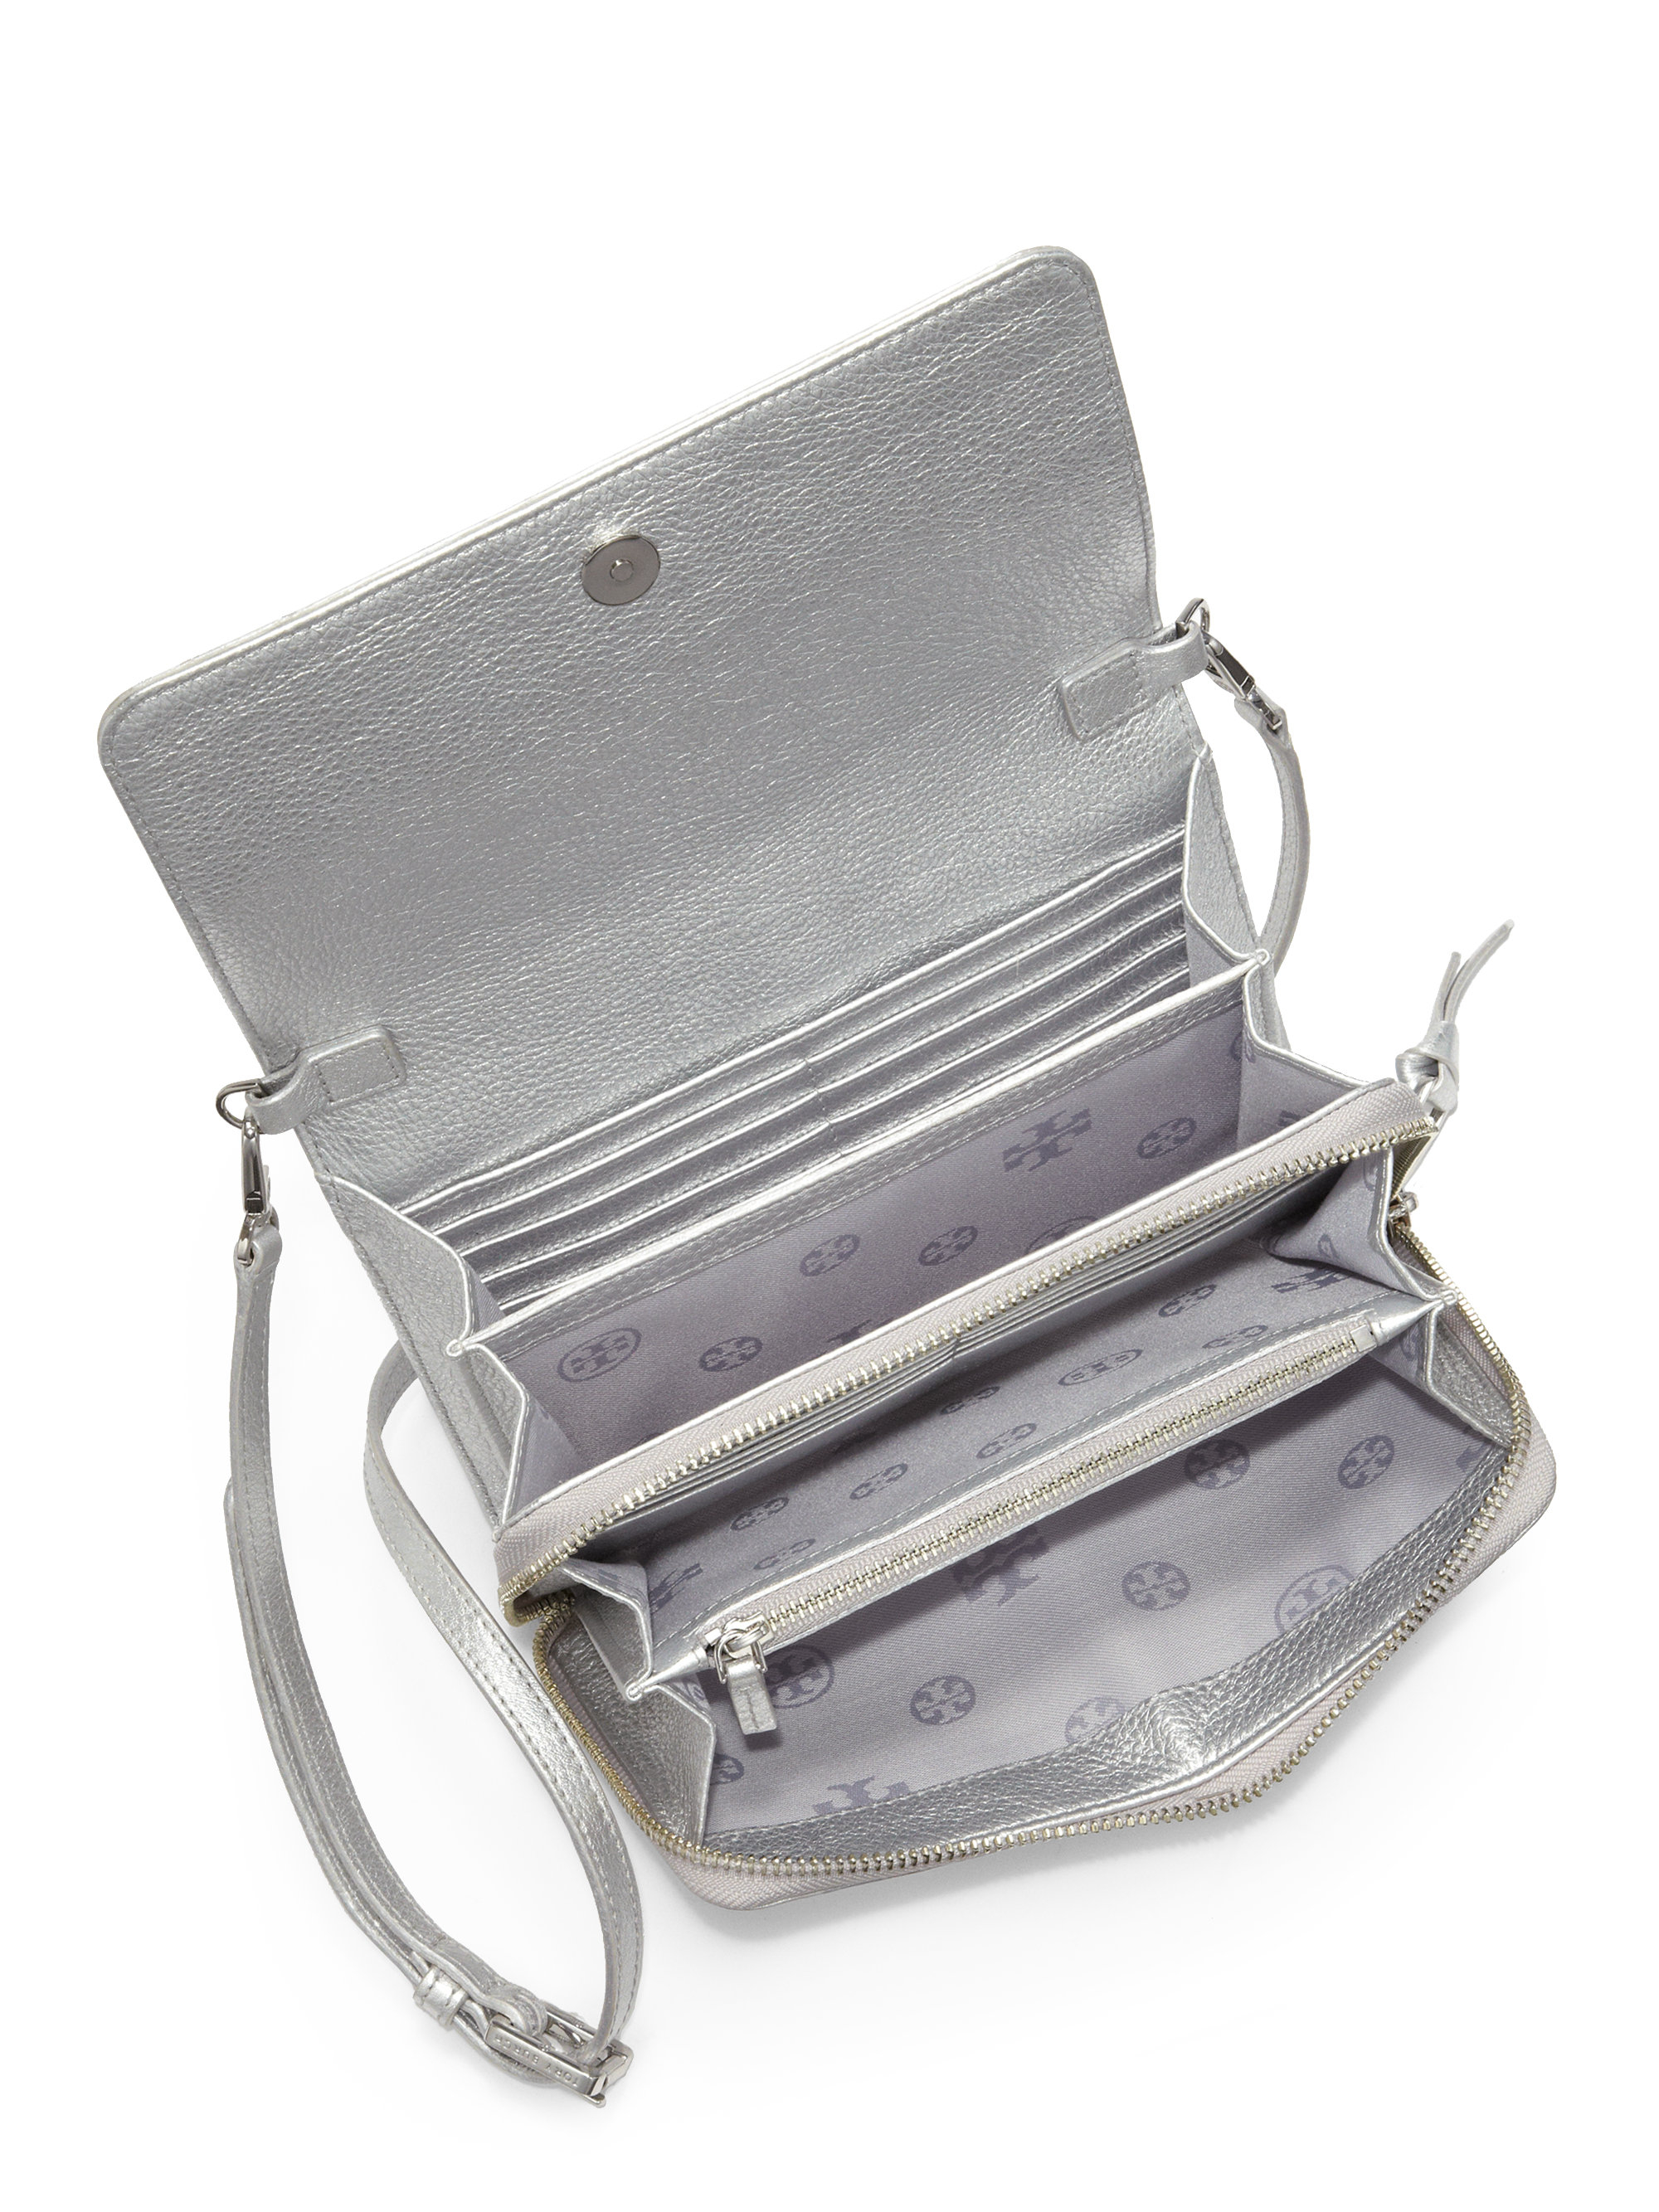 Tory burch Thea Metallic Wallet Crossbody Bag in Metallic | Lyst